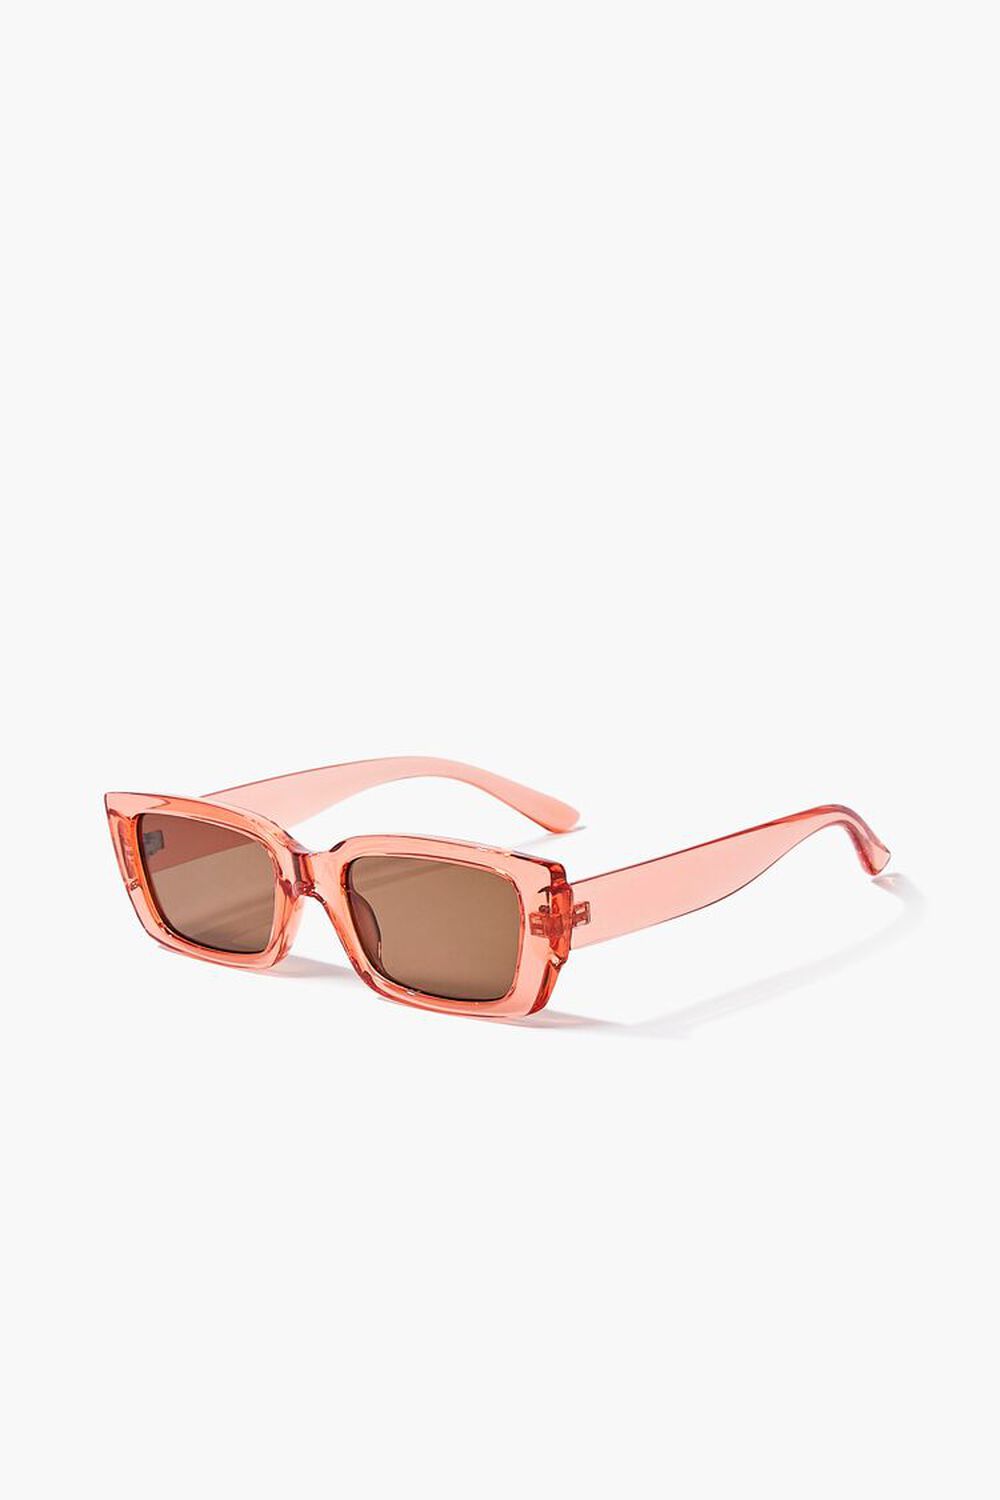 Semi-Translucent Rectangle Sunglasses, image 2